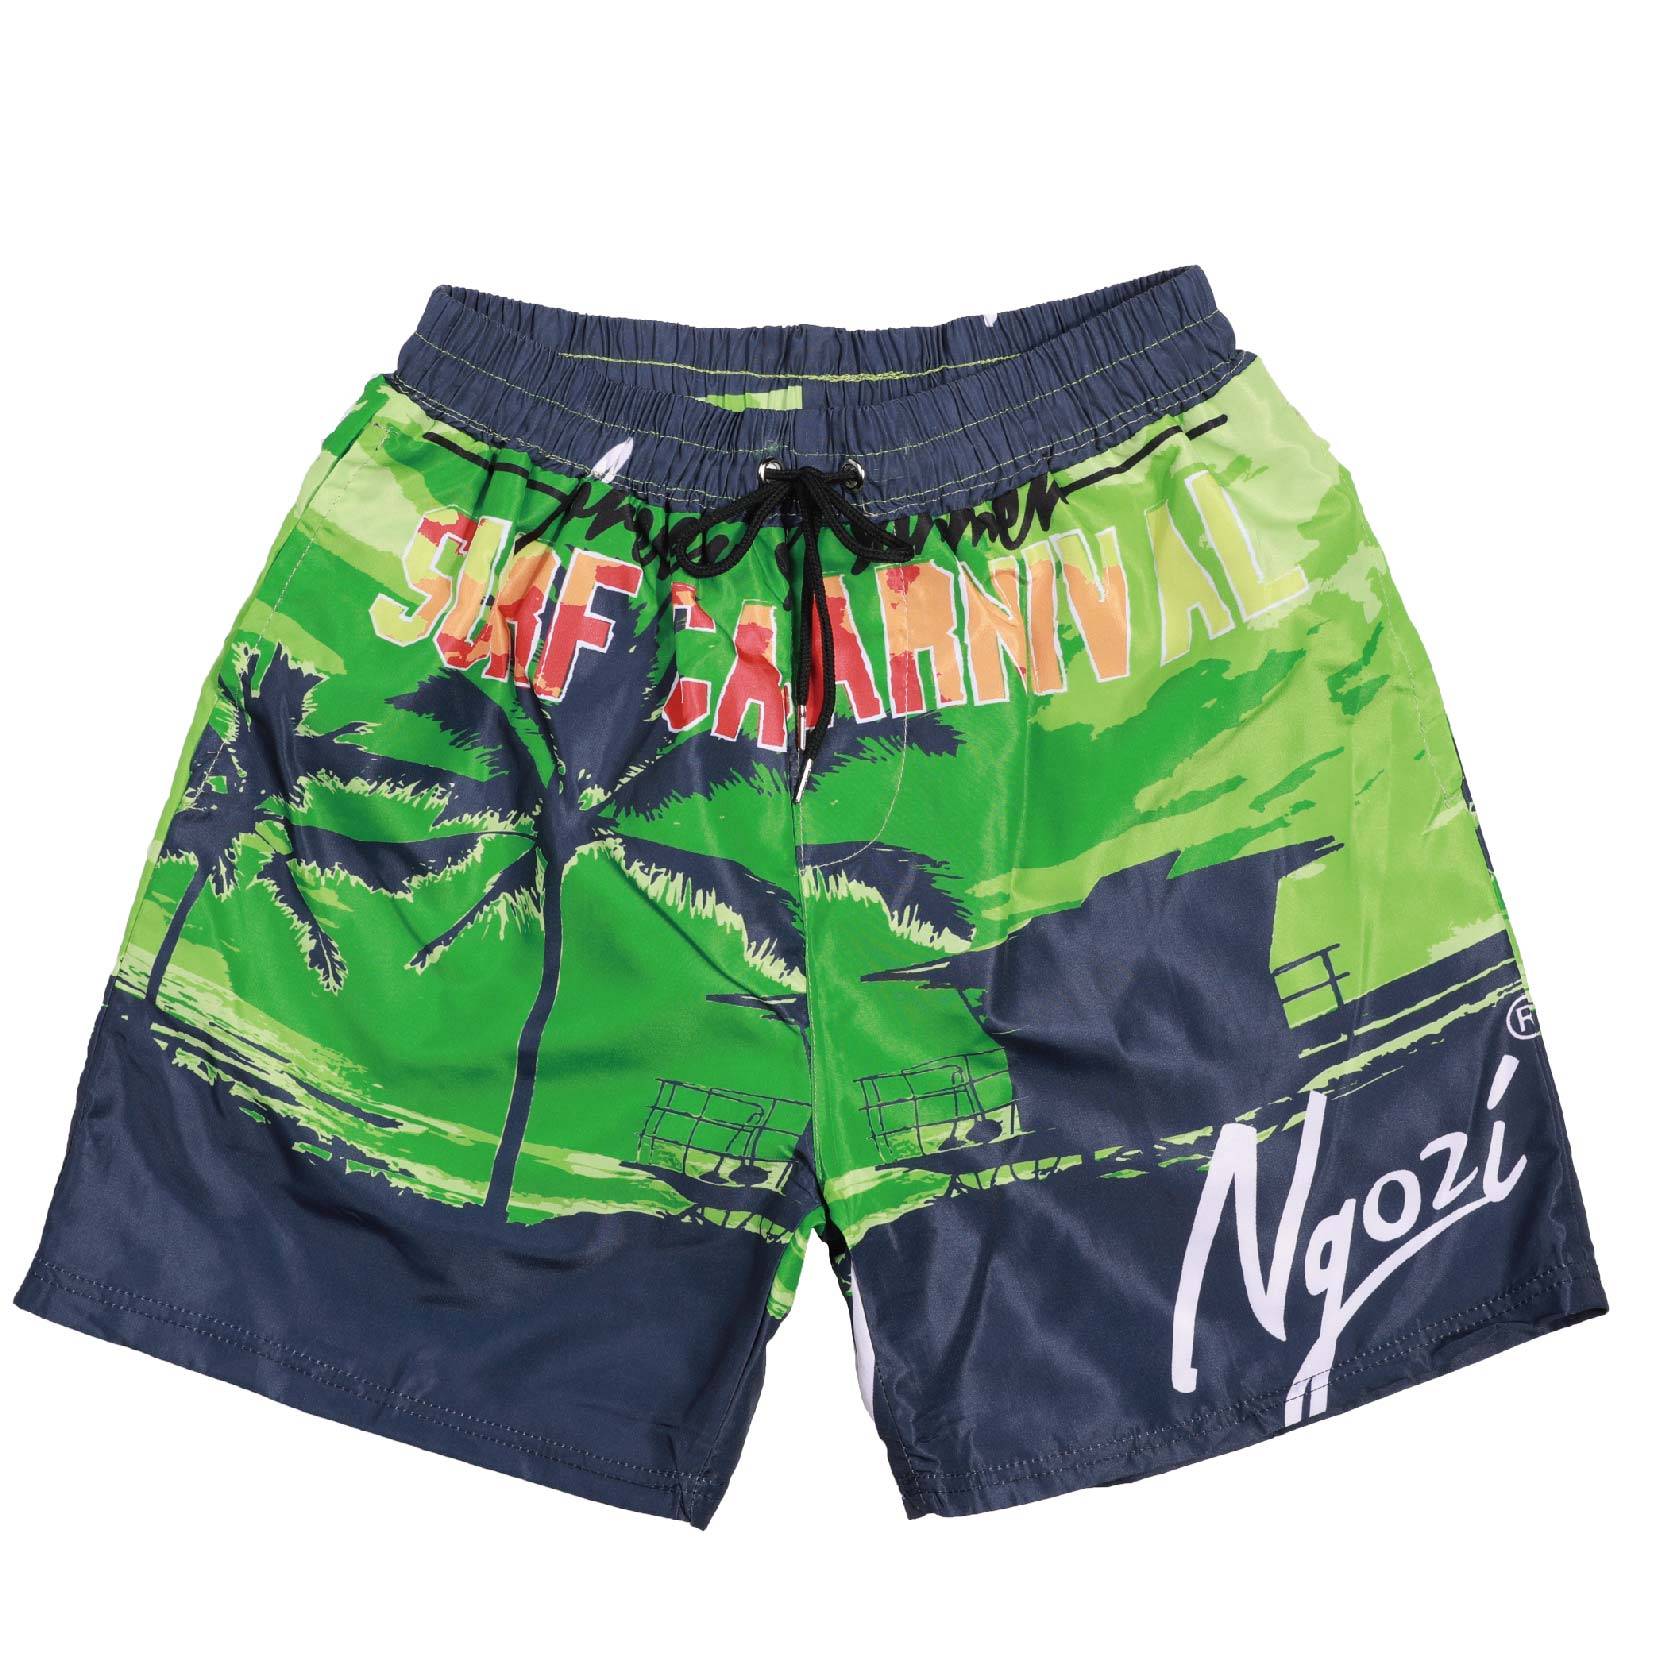 Europe style for Jean Shorts - Ngozi Beach Shorts Men Quick Dry Coconut Tree Printed Elastic Waist （Green） – Fullerton